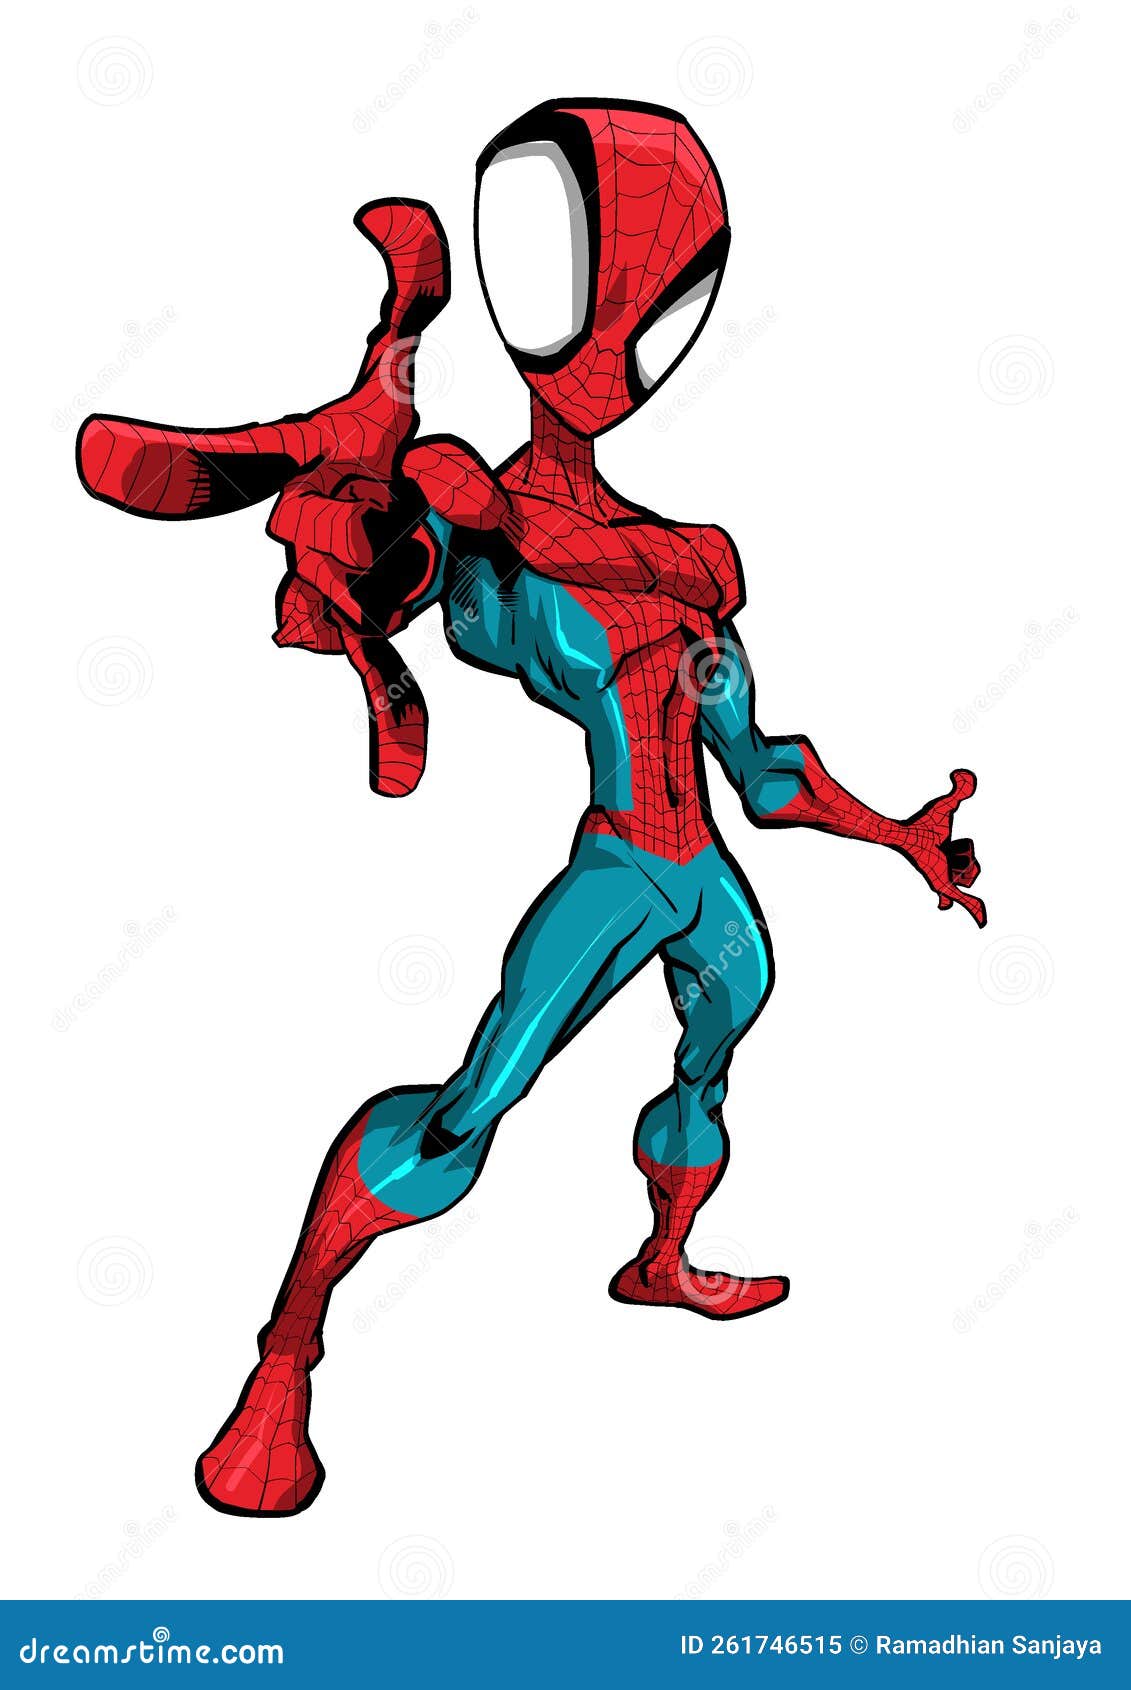 Marvel's Spider-Man guide: 5 key tips for web-swinging